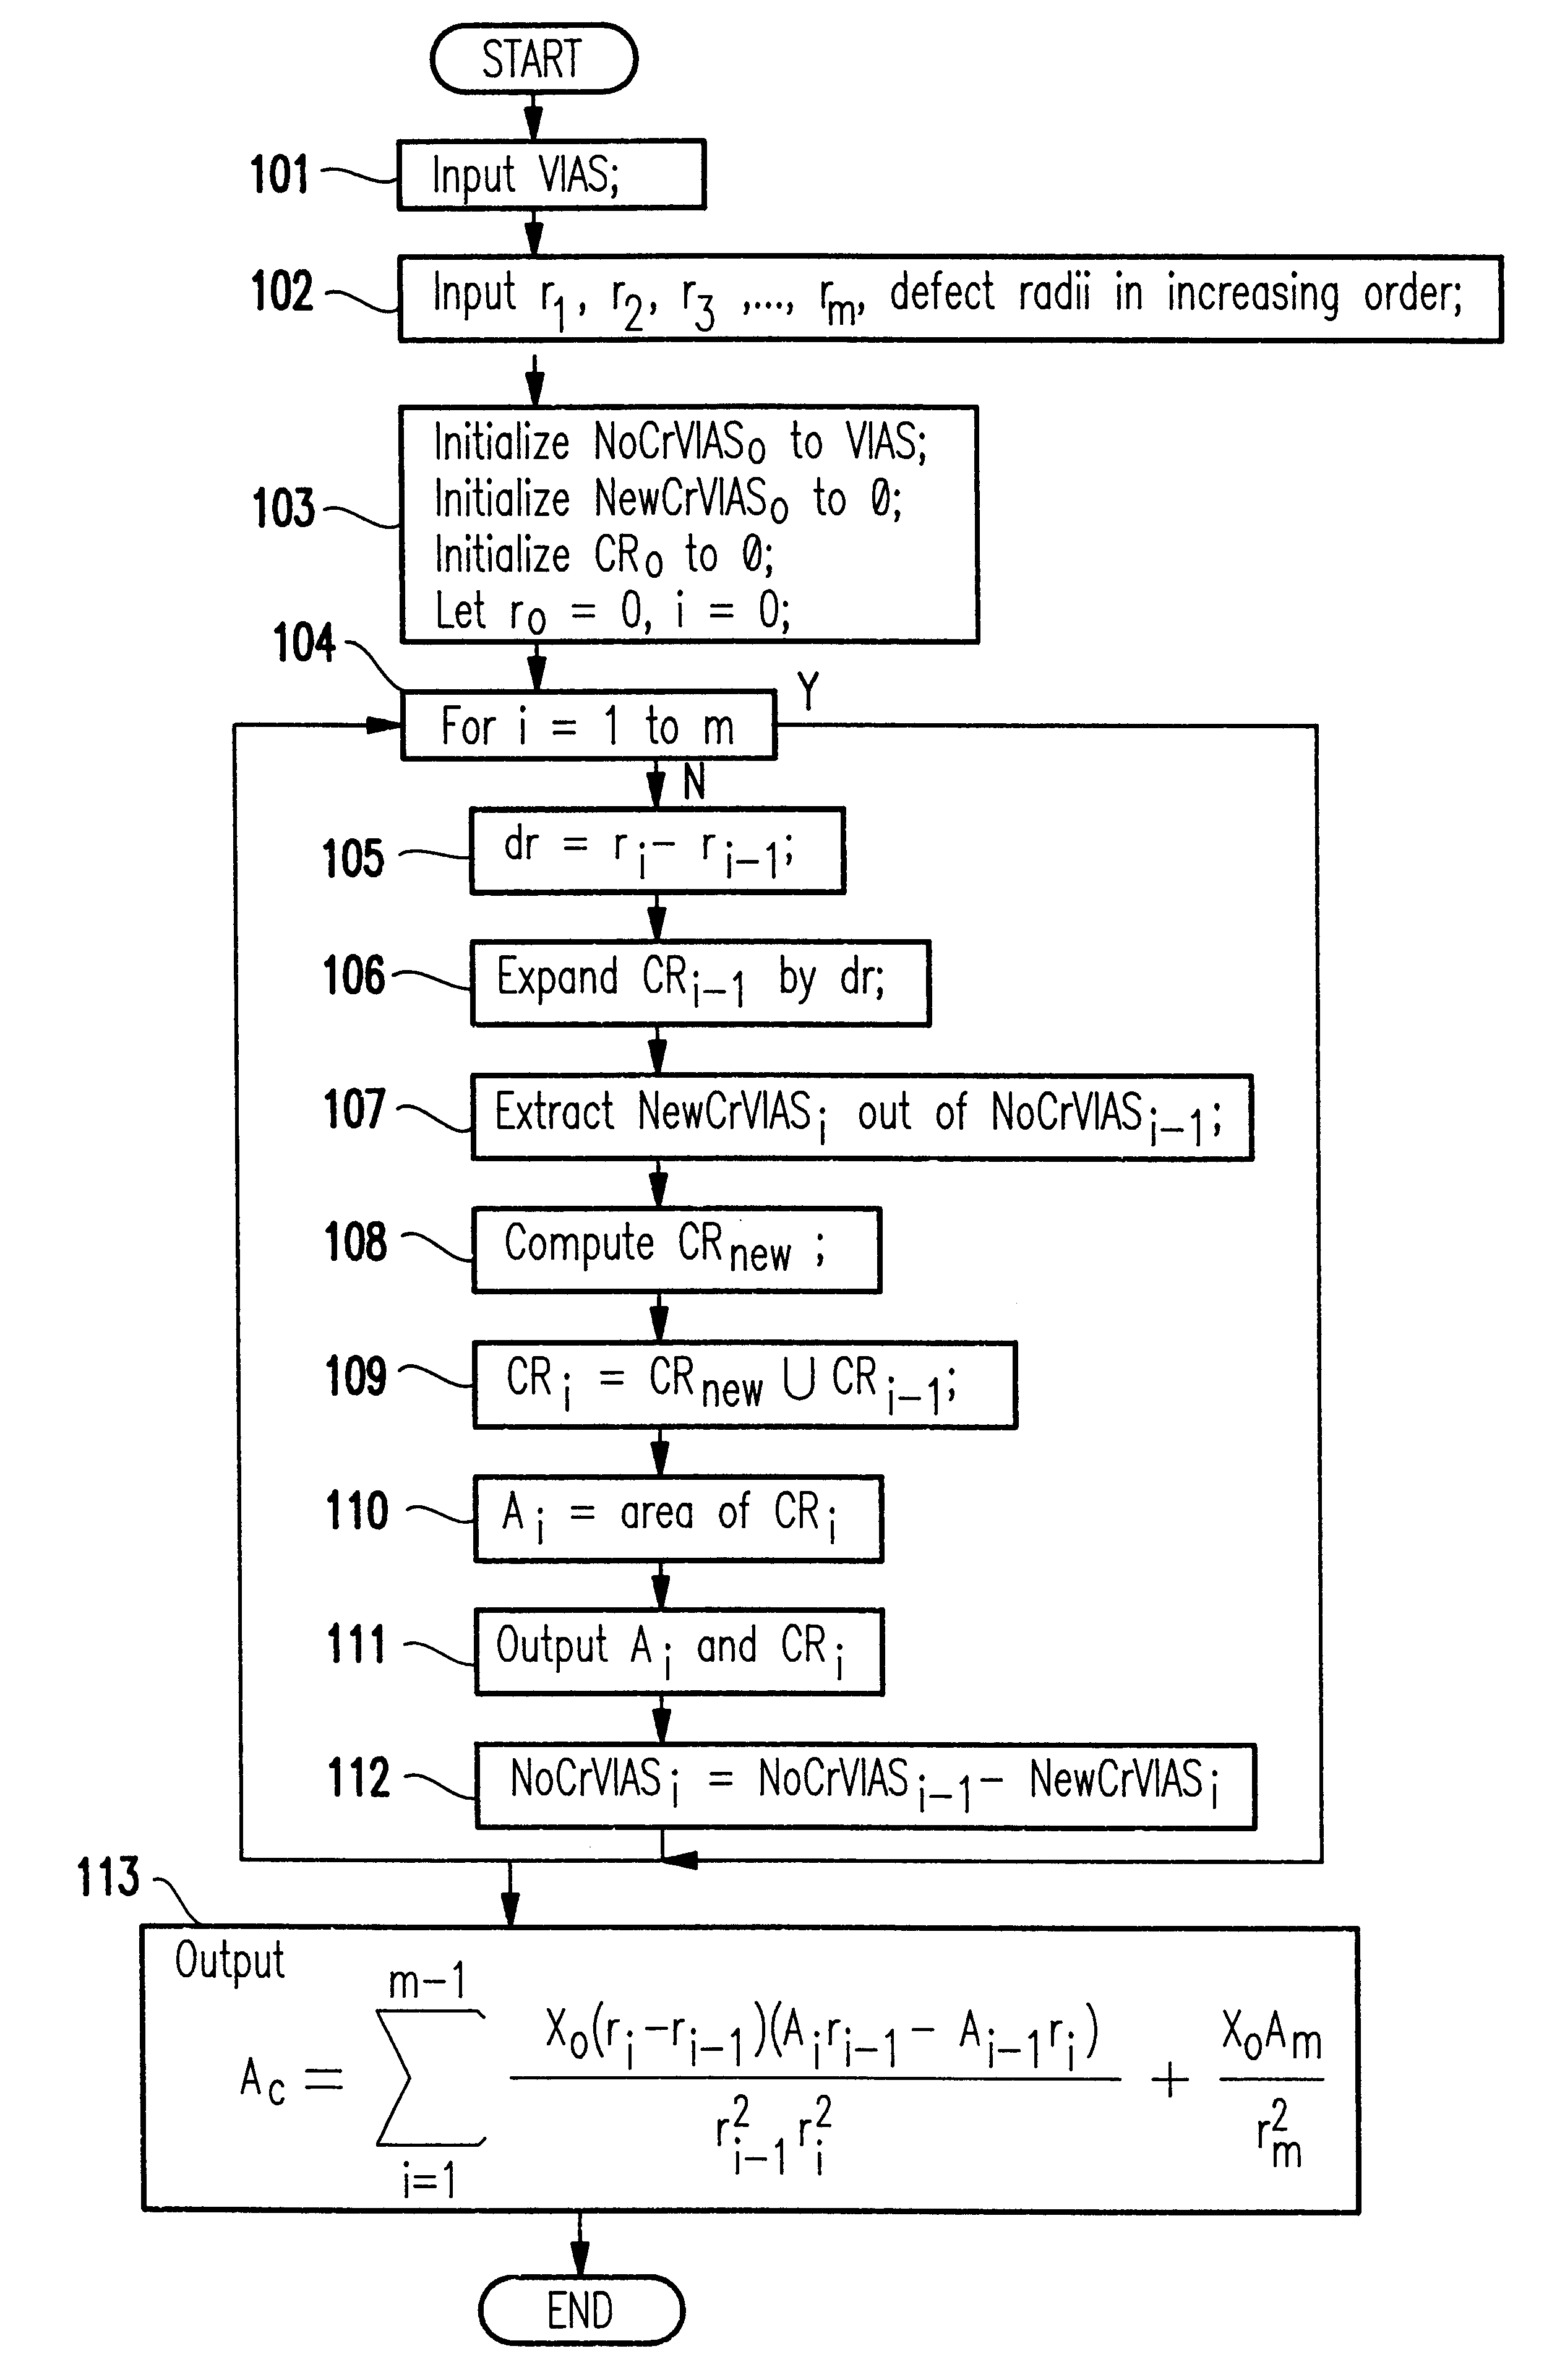 Incremental method for critical area and critical region computation of via blocks